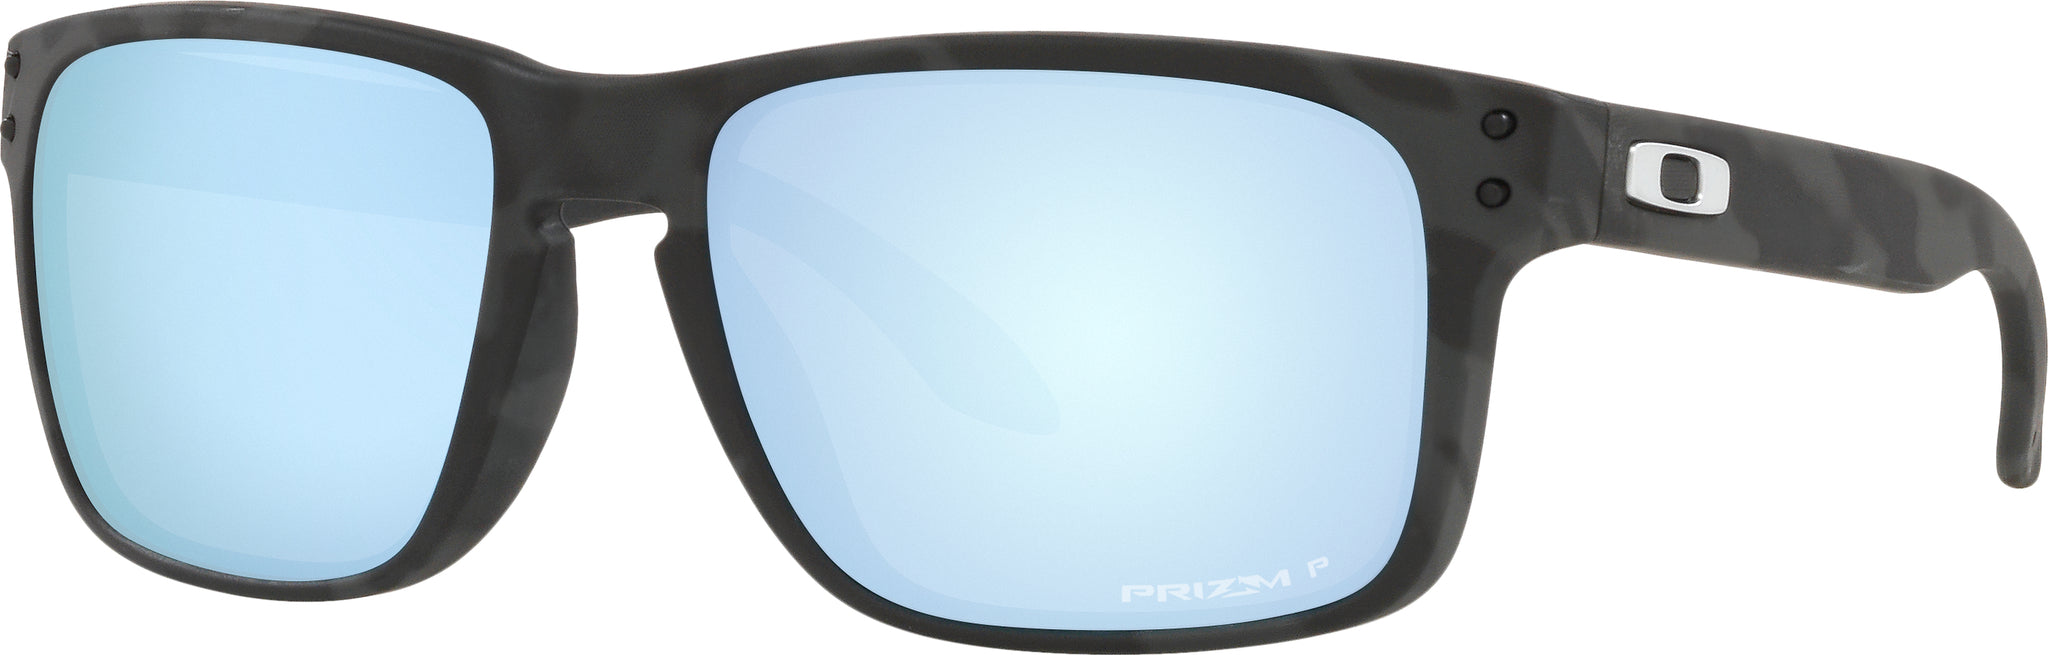 Oakley Holbrook Sunglasses - Steel - Prizm Snow Sapphire Lens - Men's |  Altitude Sports